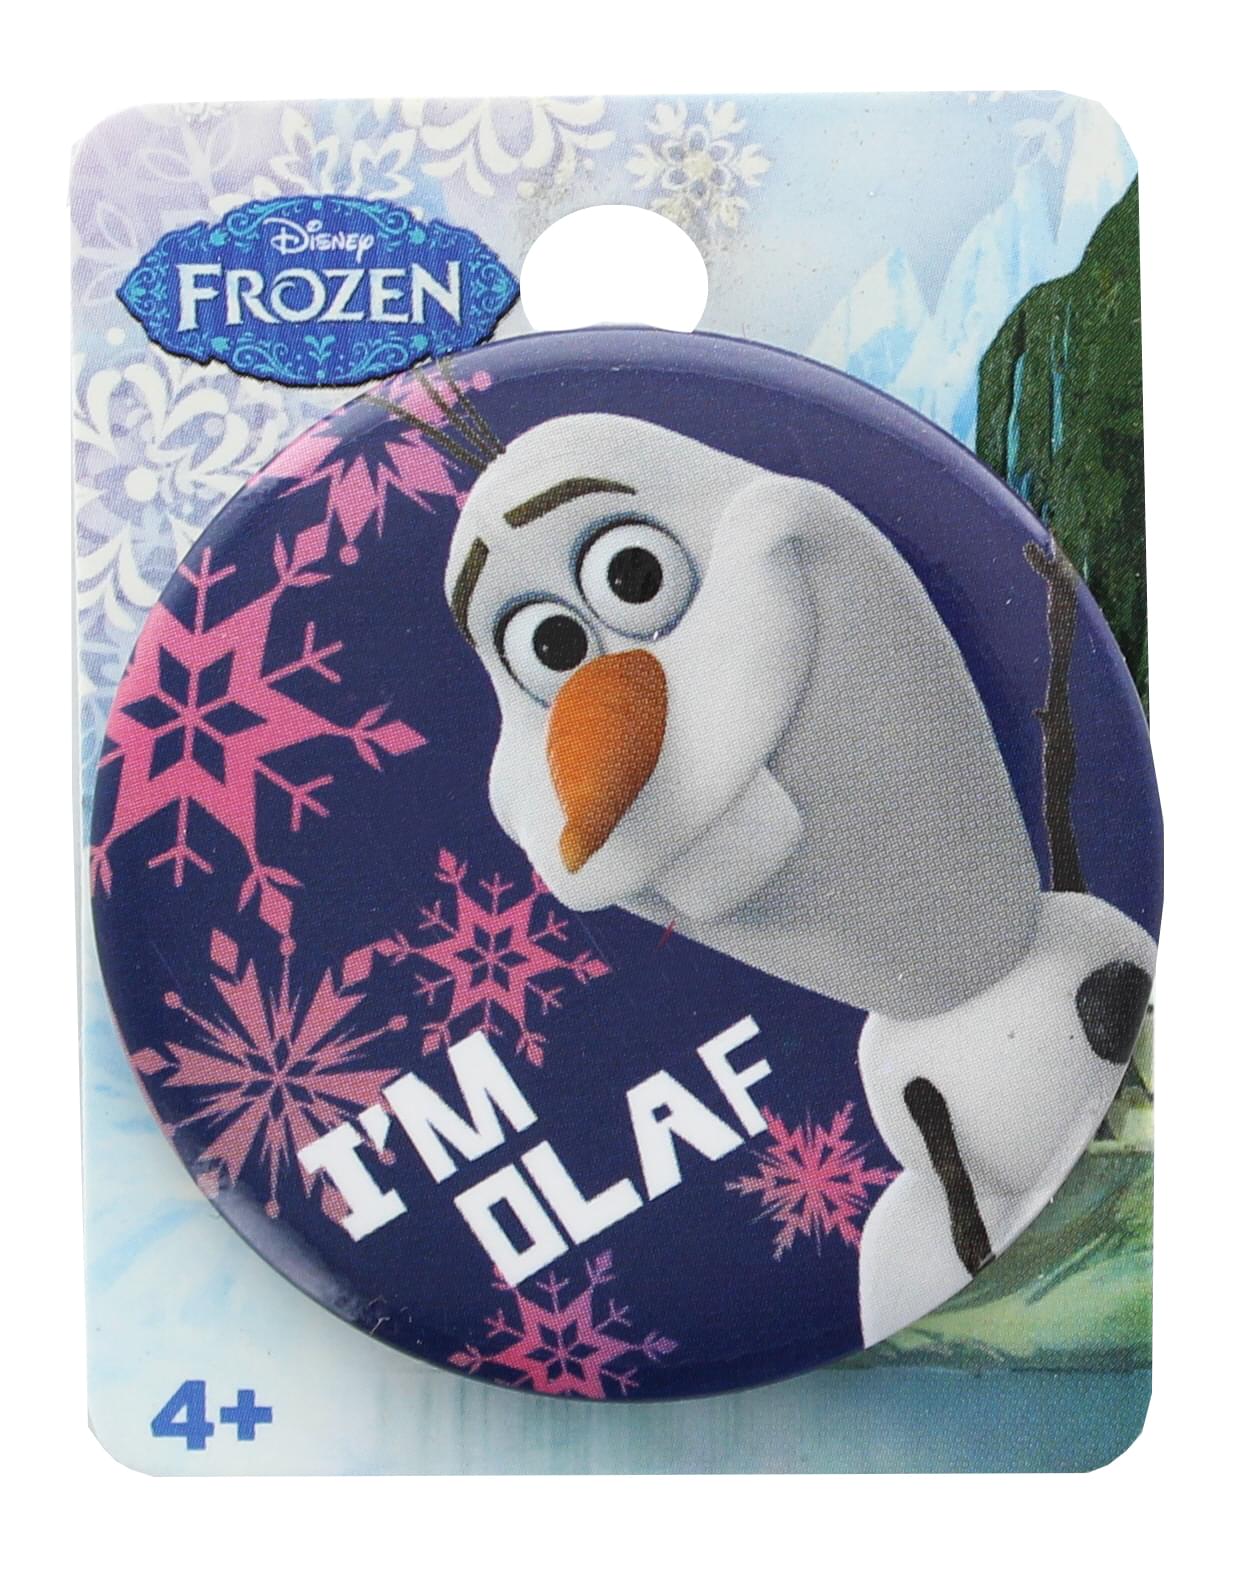 Disney's Frozen 1.5" Button: "I'm Olaf"